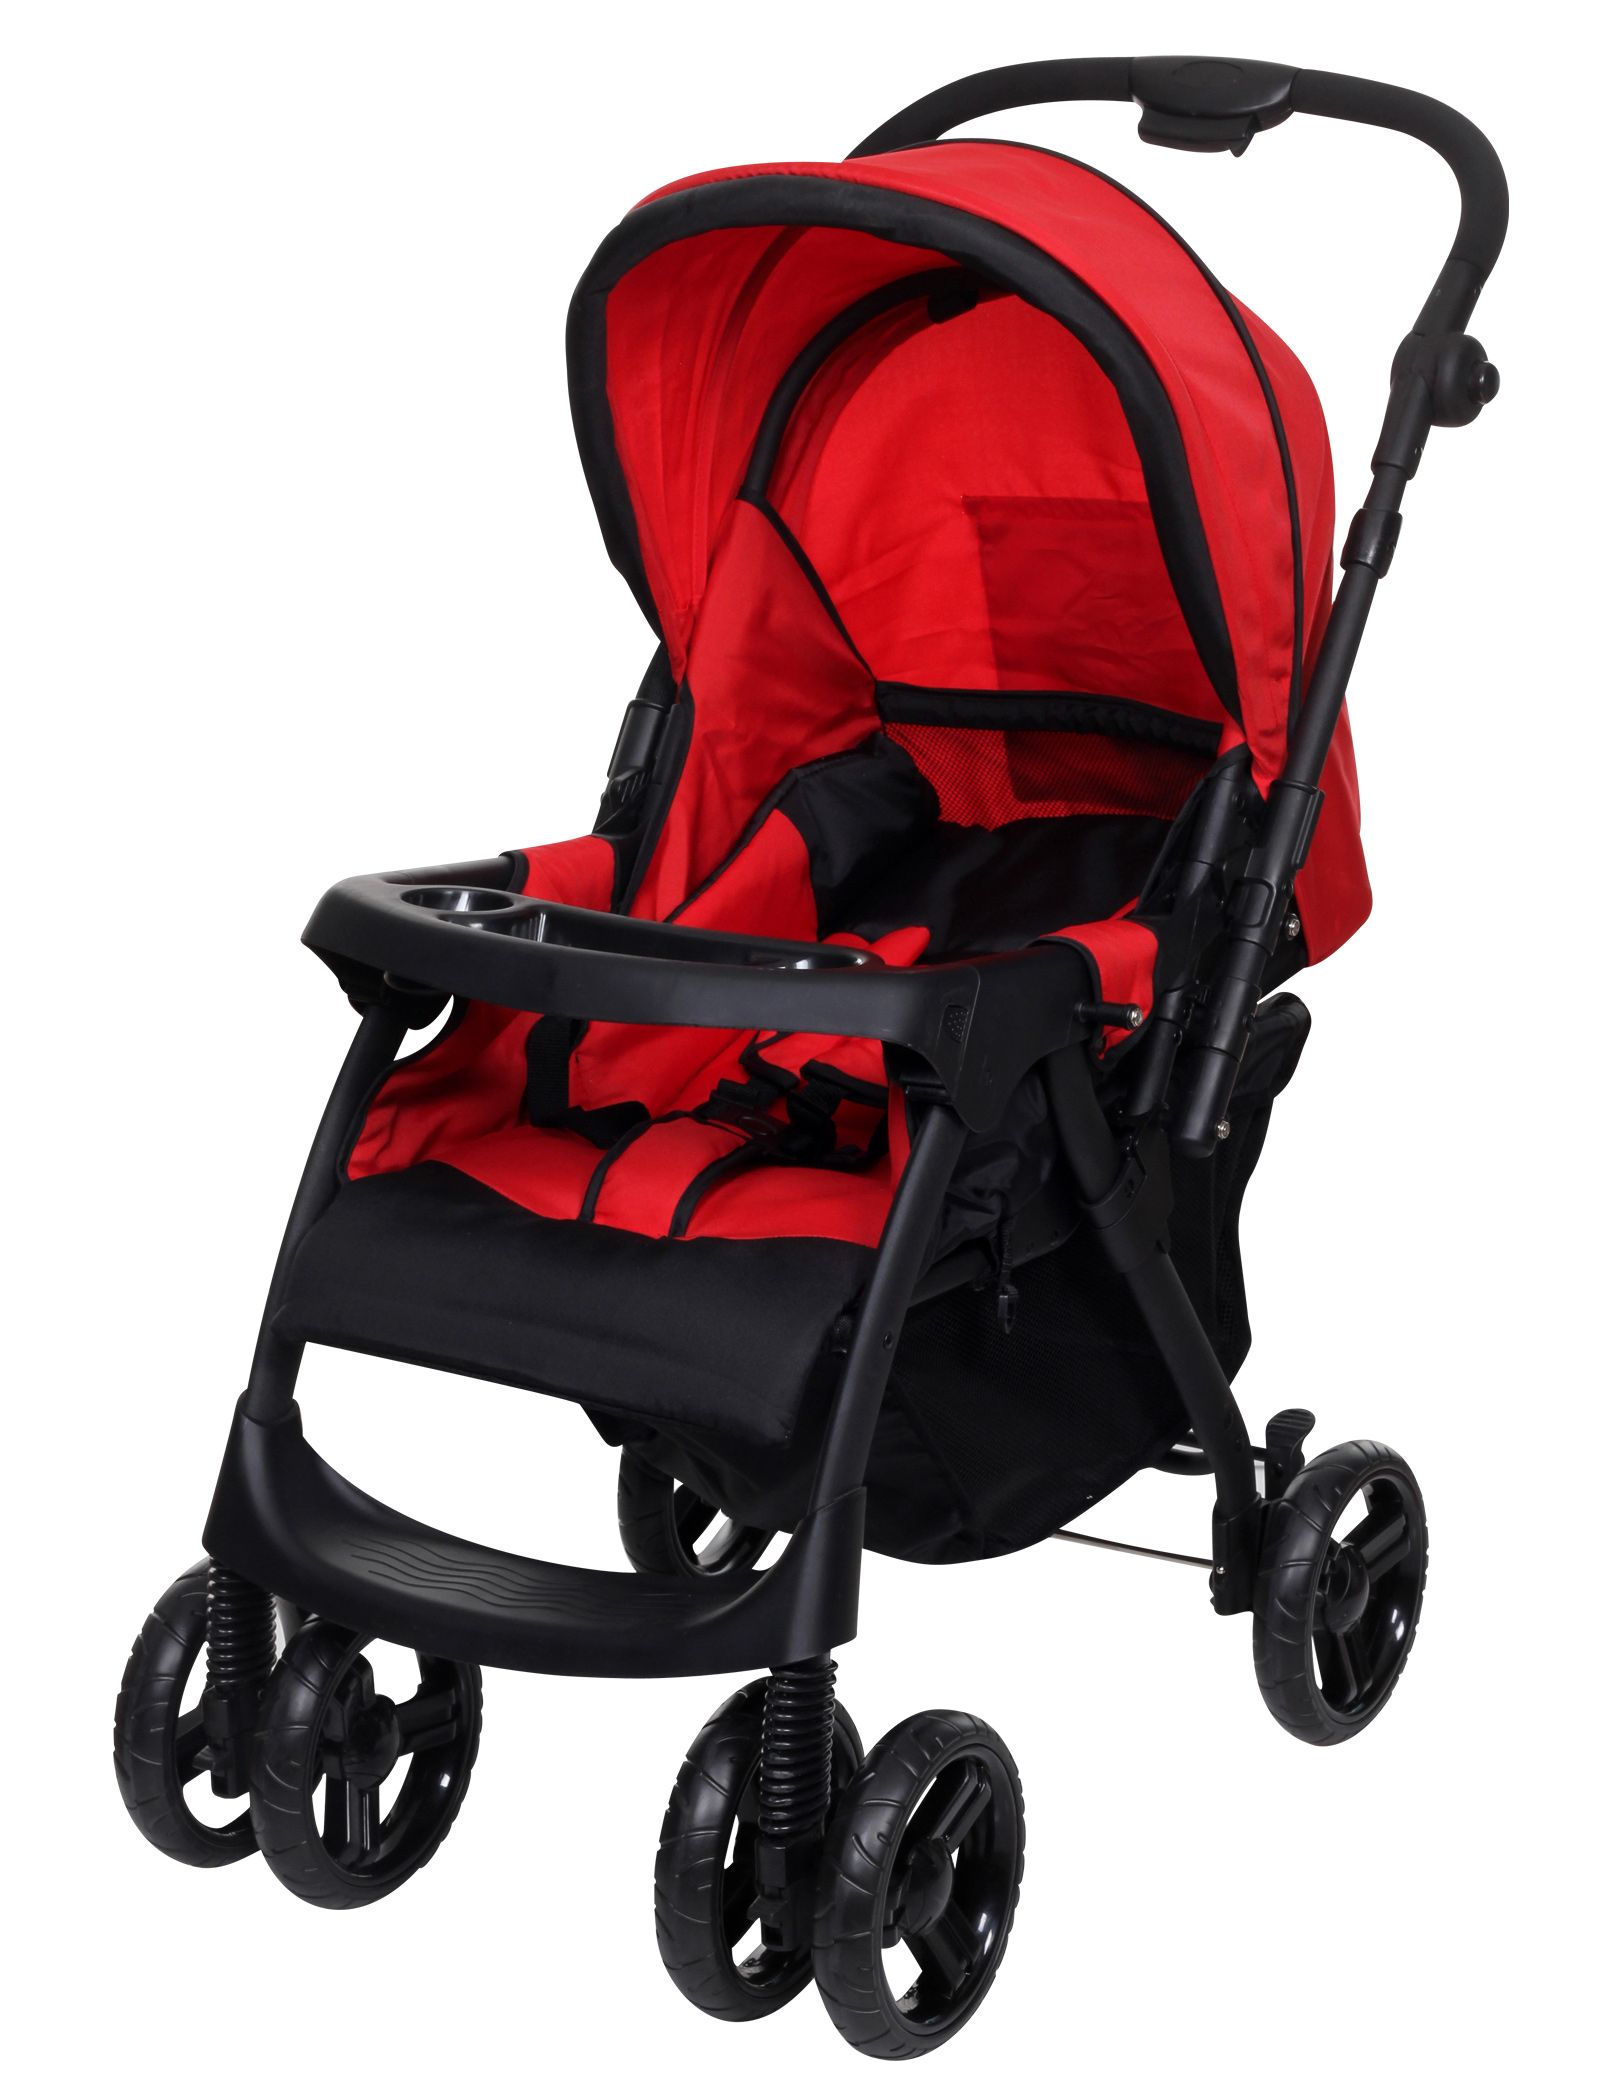 Sunbaby - Red Baby Stroller